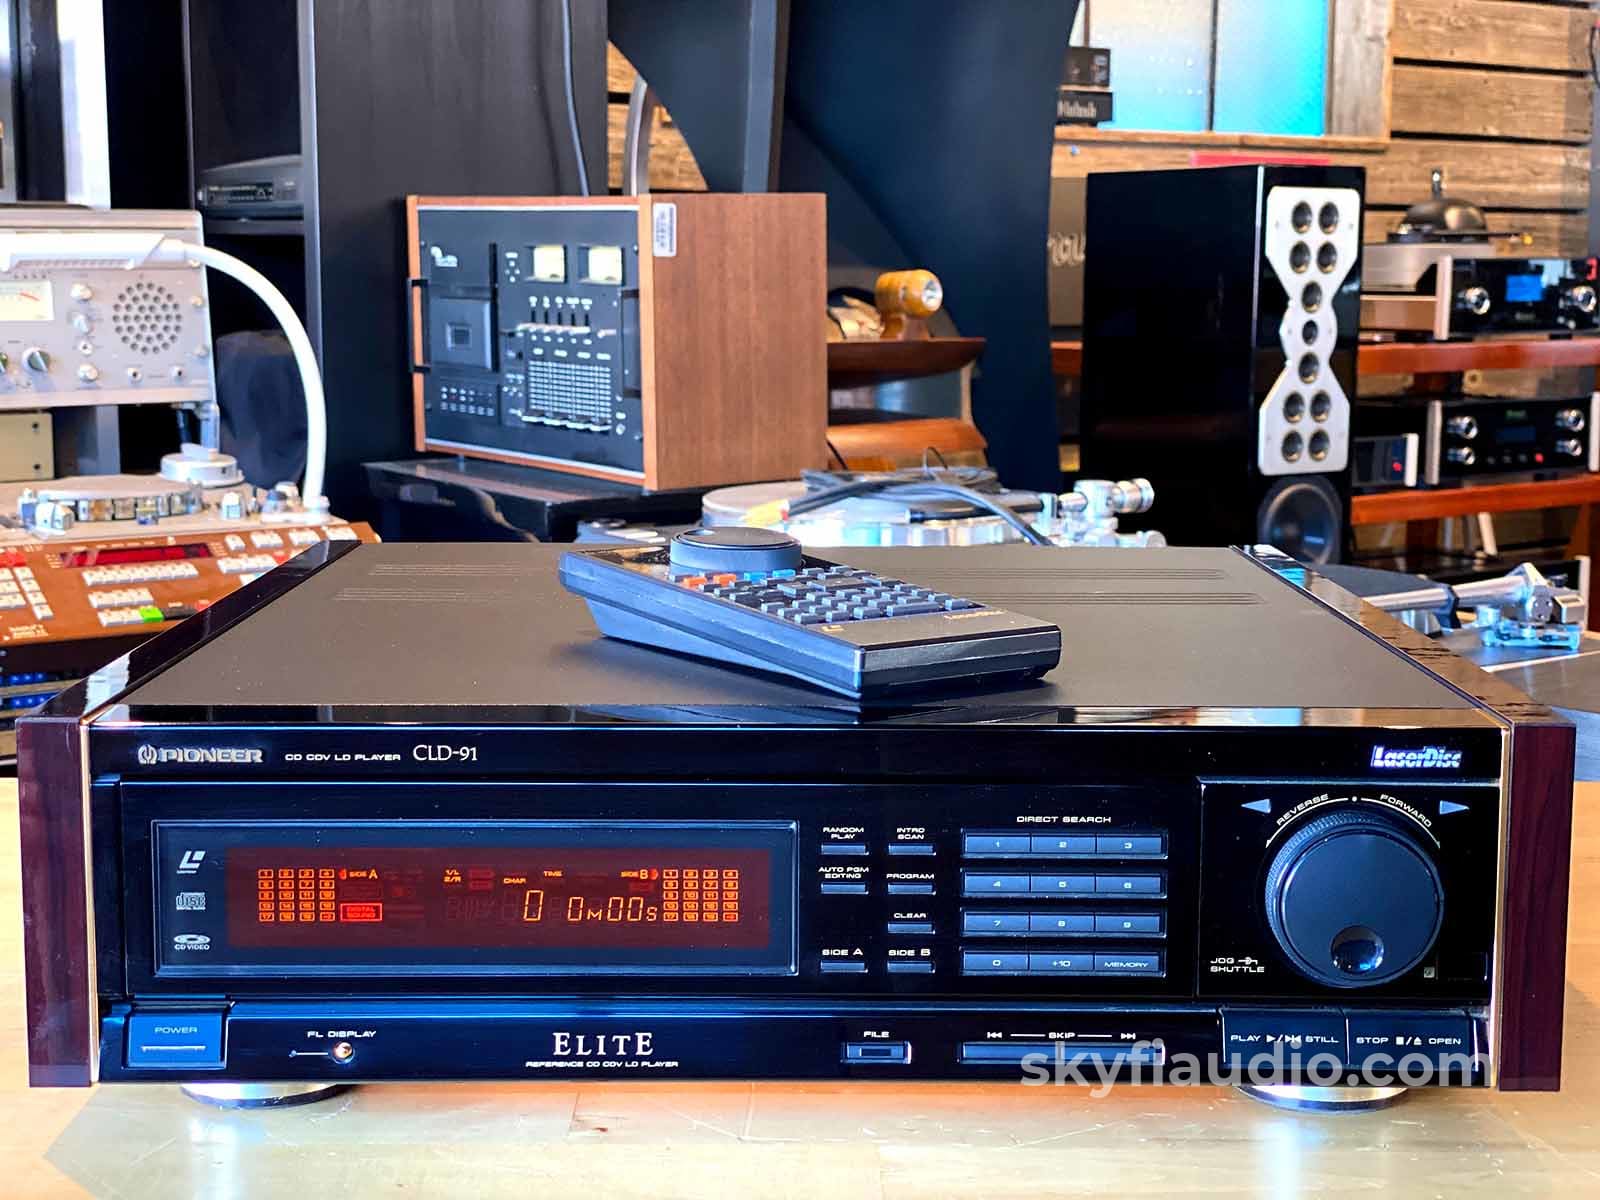 Pioneer Elite Cld-91 Laserdisc And Cd Player - Super Clean + Digital